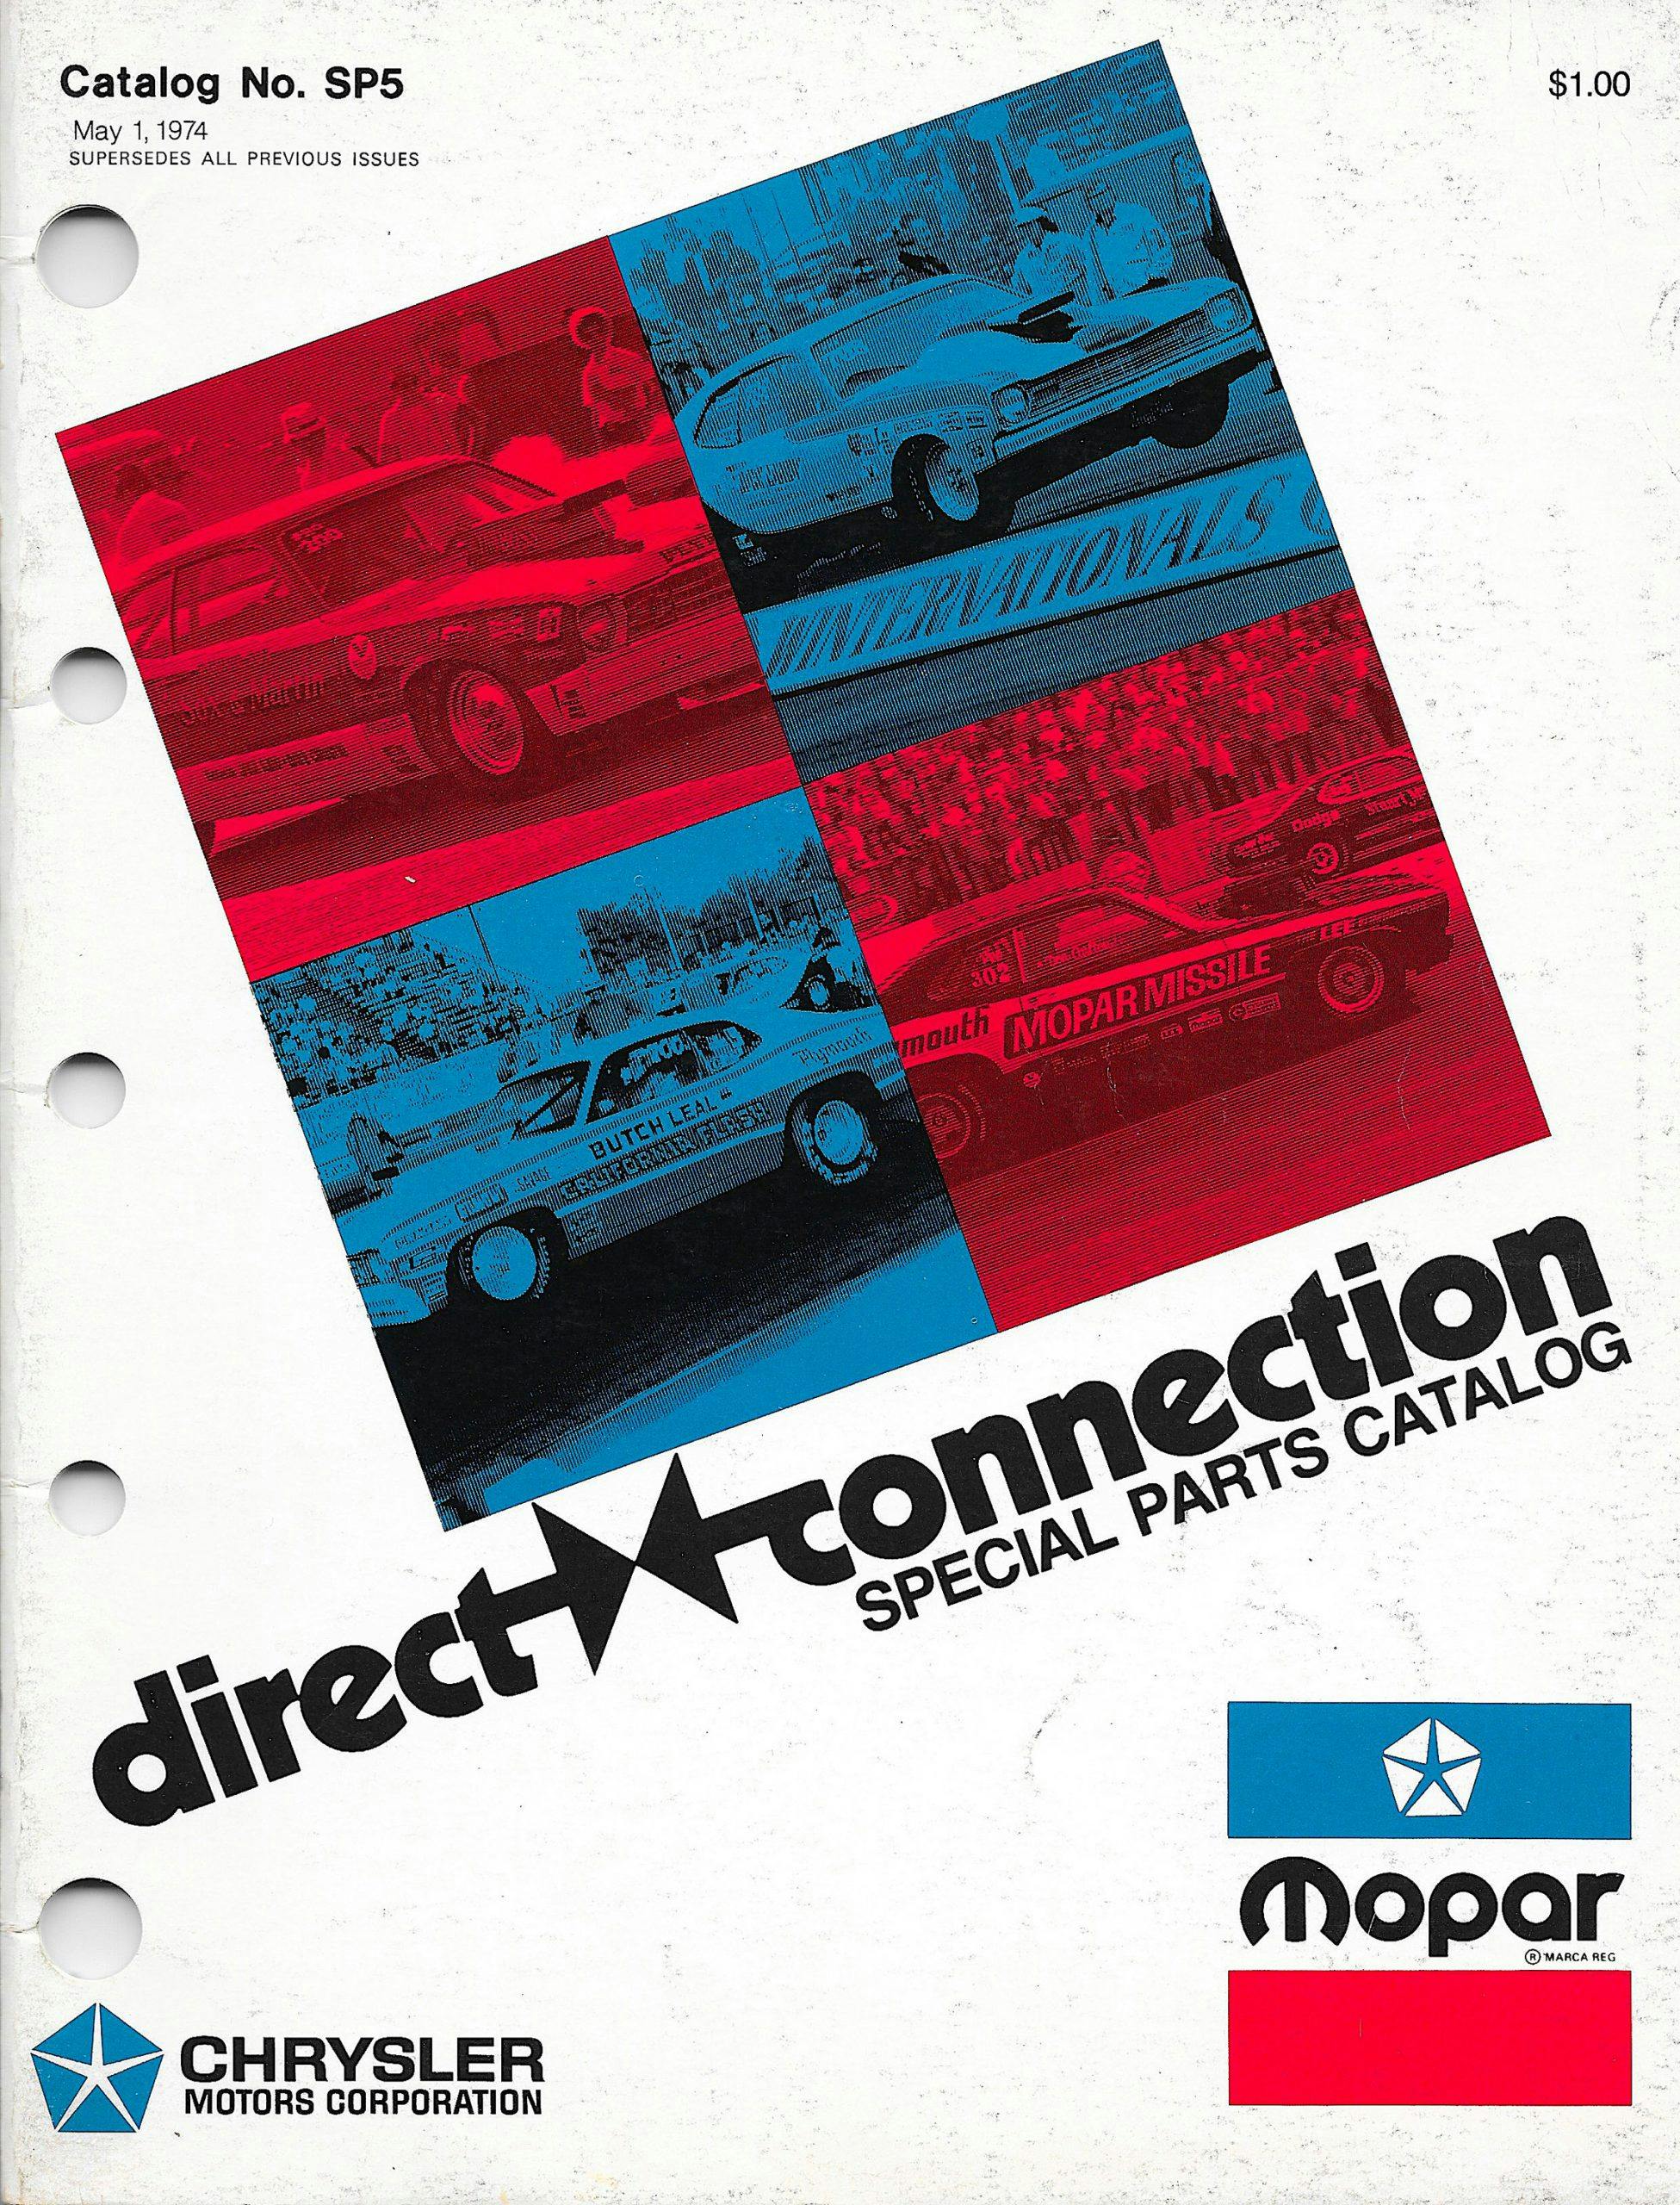 The original 1974 Direct Connection parts catalog